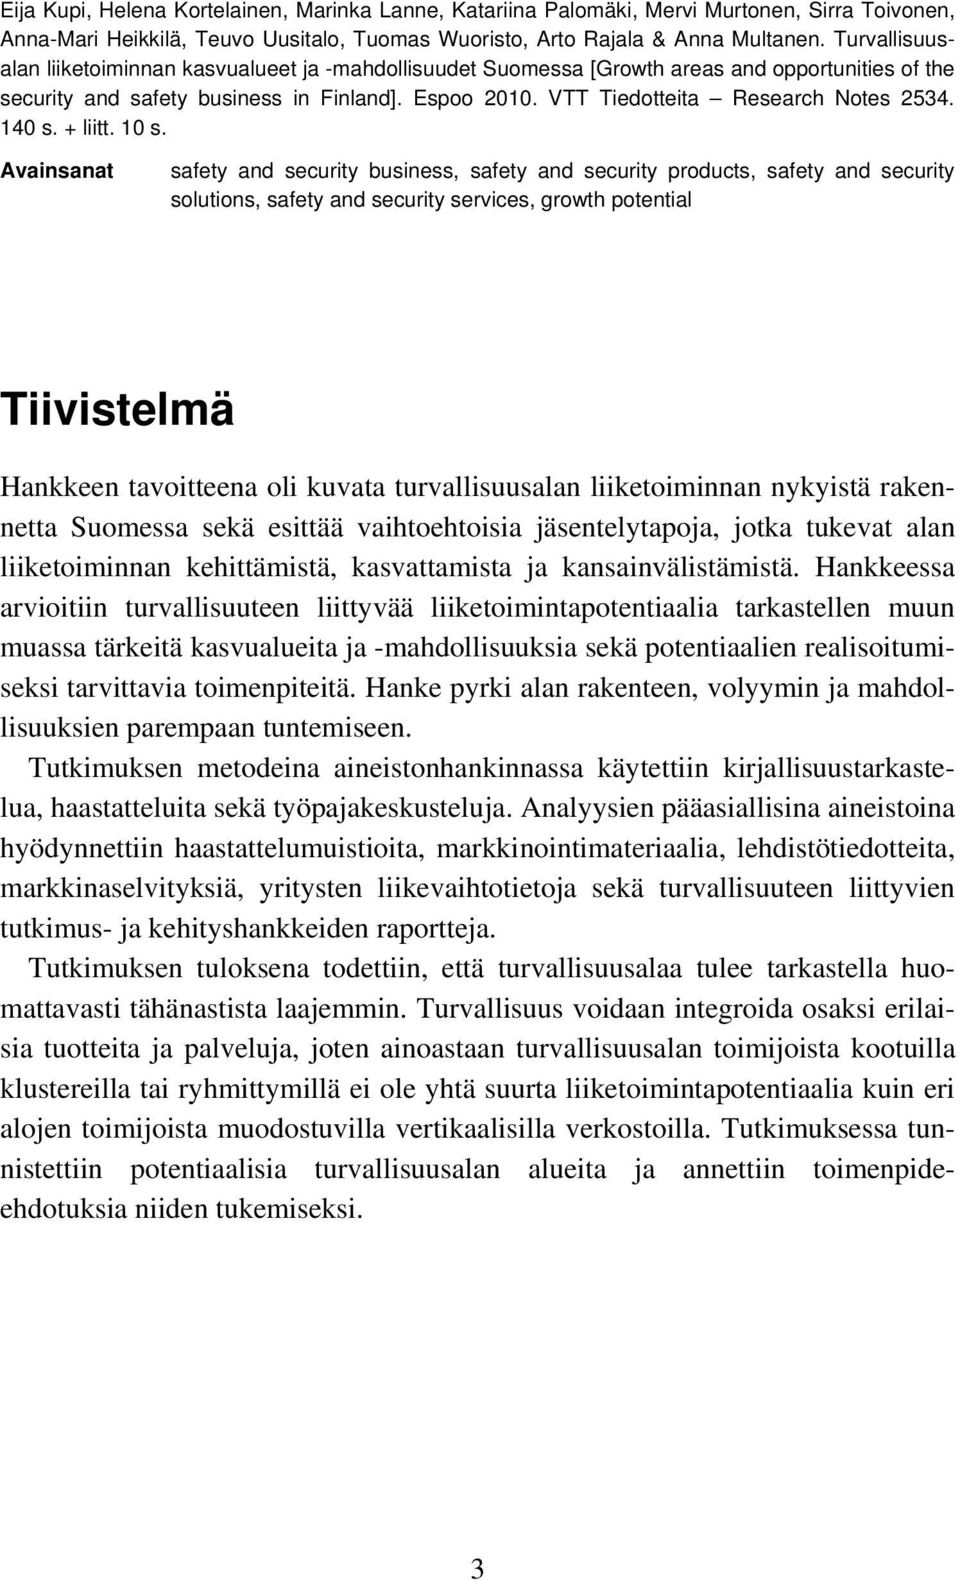 VTT Tiedotteita Research Notes 2534. 140 s. + liitt. 10 s.